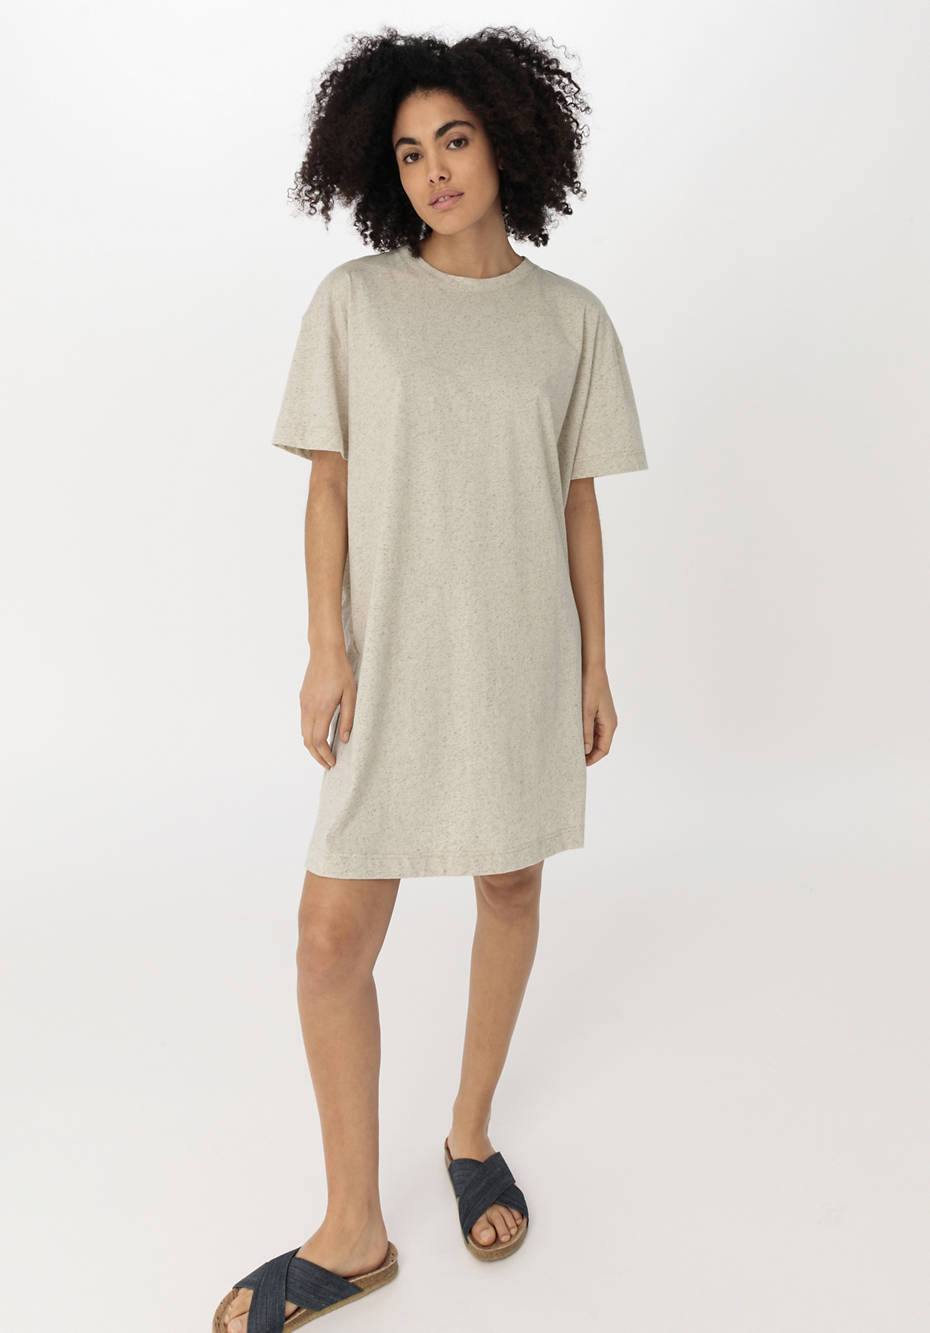 T-shirt dress made from organic cotton with hemp